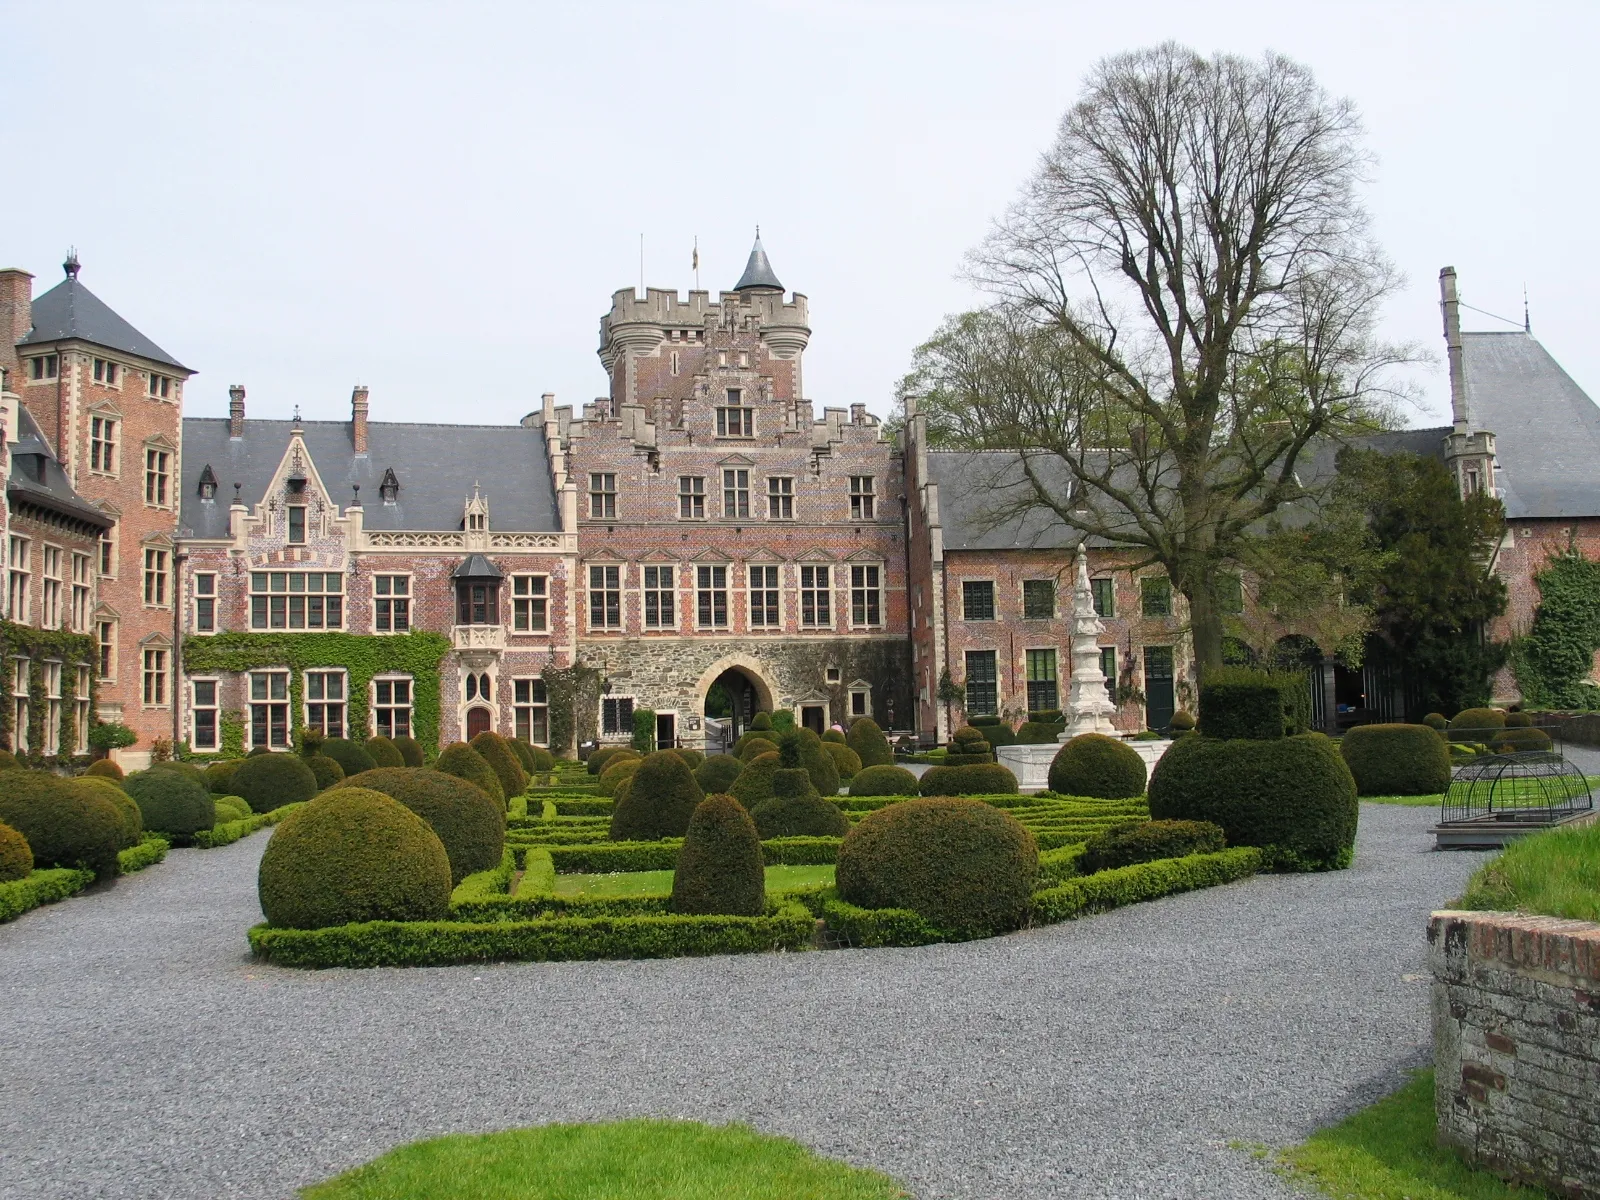 Photo showing: Summary
Het binnenhof van het kasteel van Gaasbeek - eigen foto

== Licensing ==